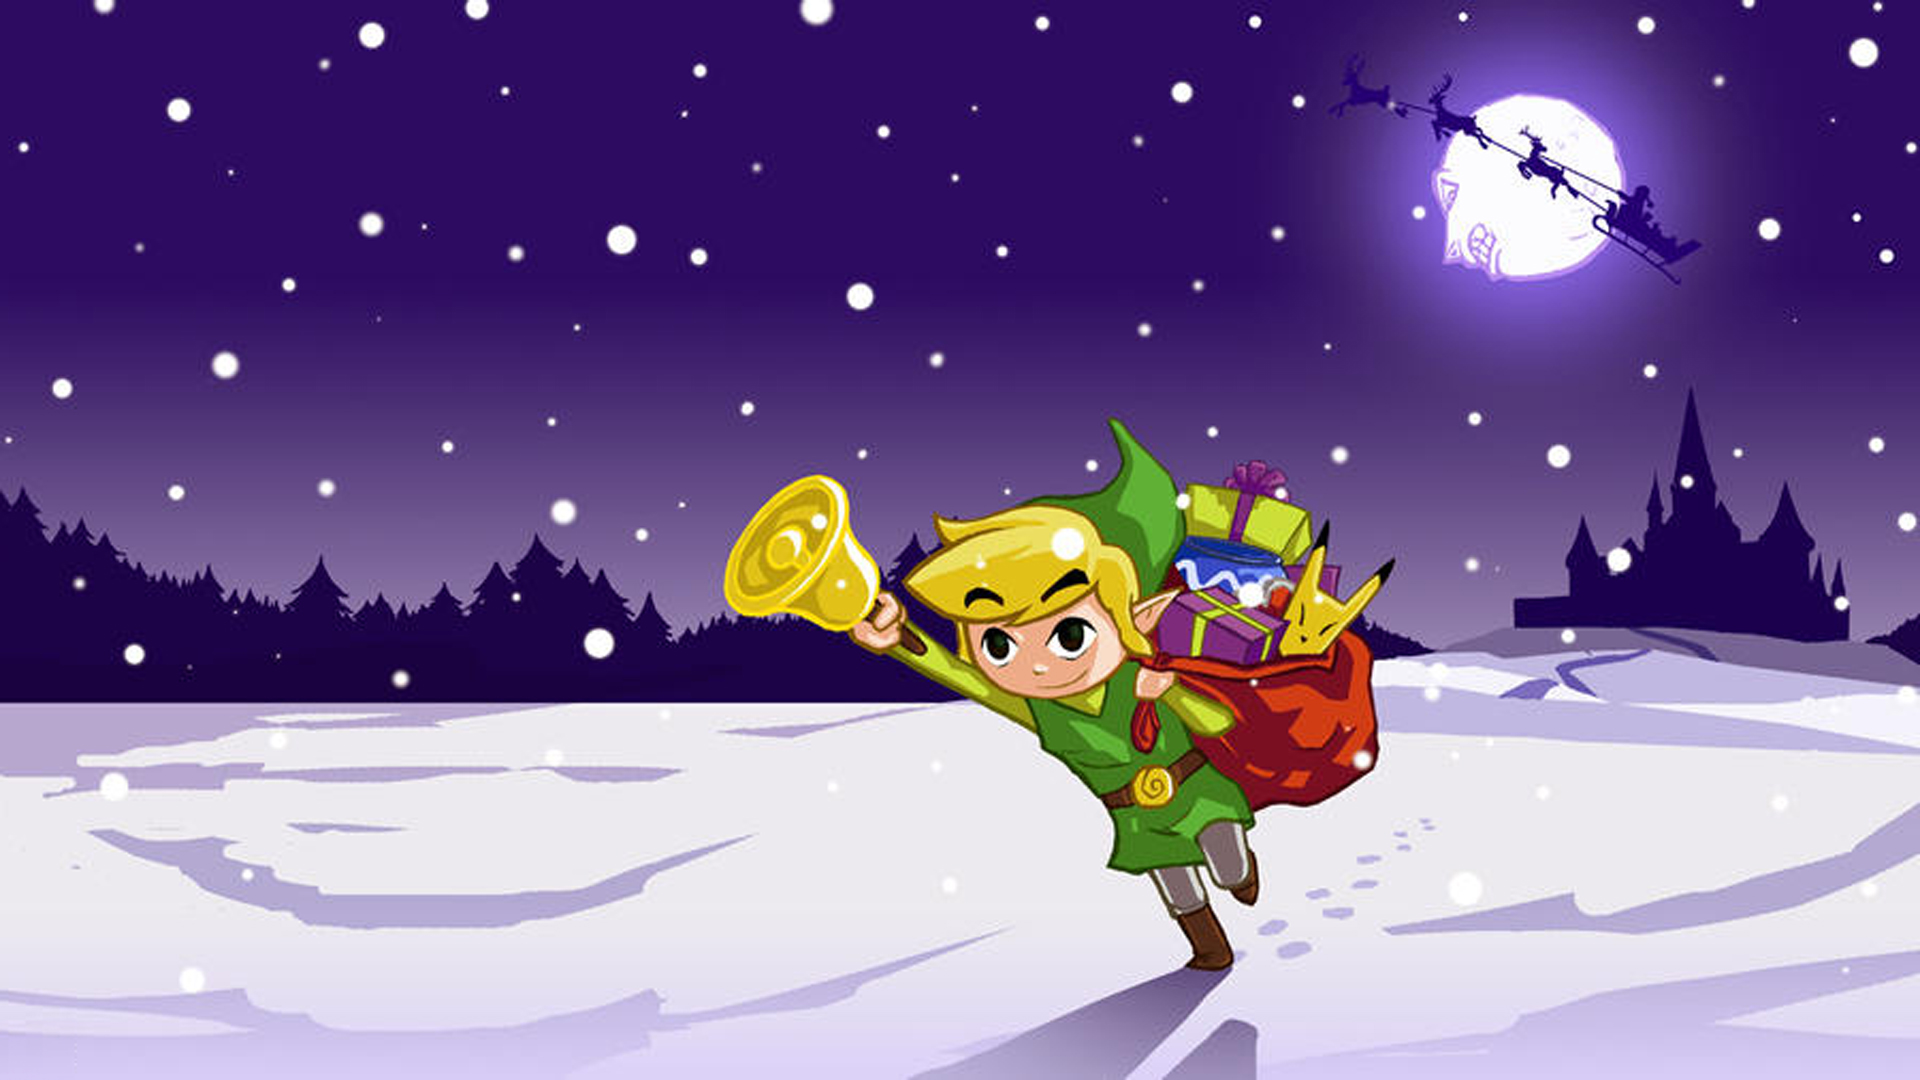 The Legend of Zelda Fans’ Christmas Gift Guide: Epic Finds for Hyrule Warriors